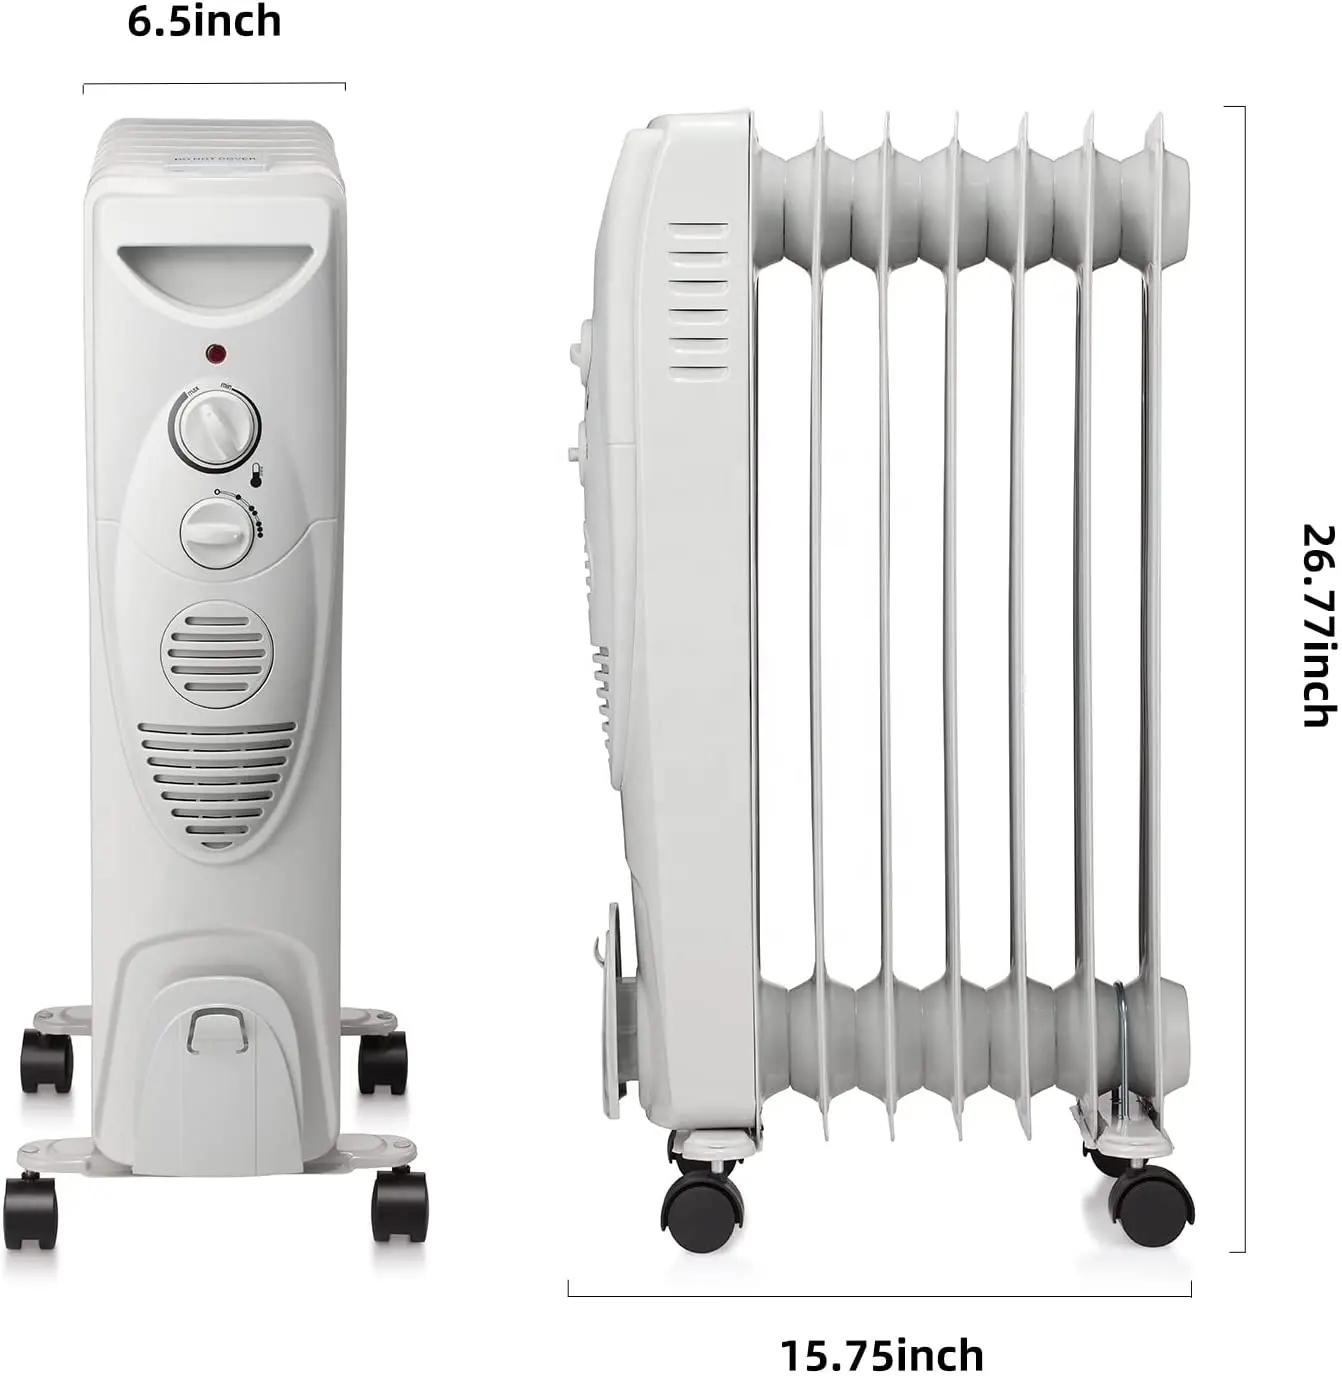 Oil Filled Radiator Heater 3 Heat SettingsAdjustable ThermostatPortable Space heaterQuiet Heater with Tip-over & Overheat